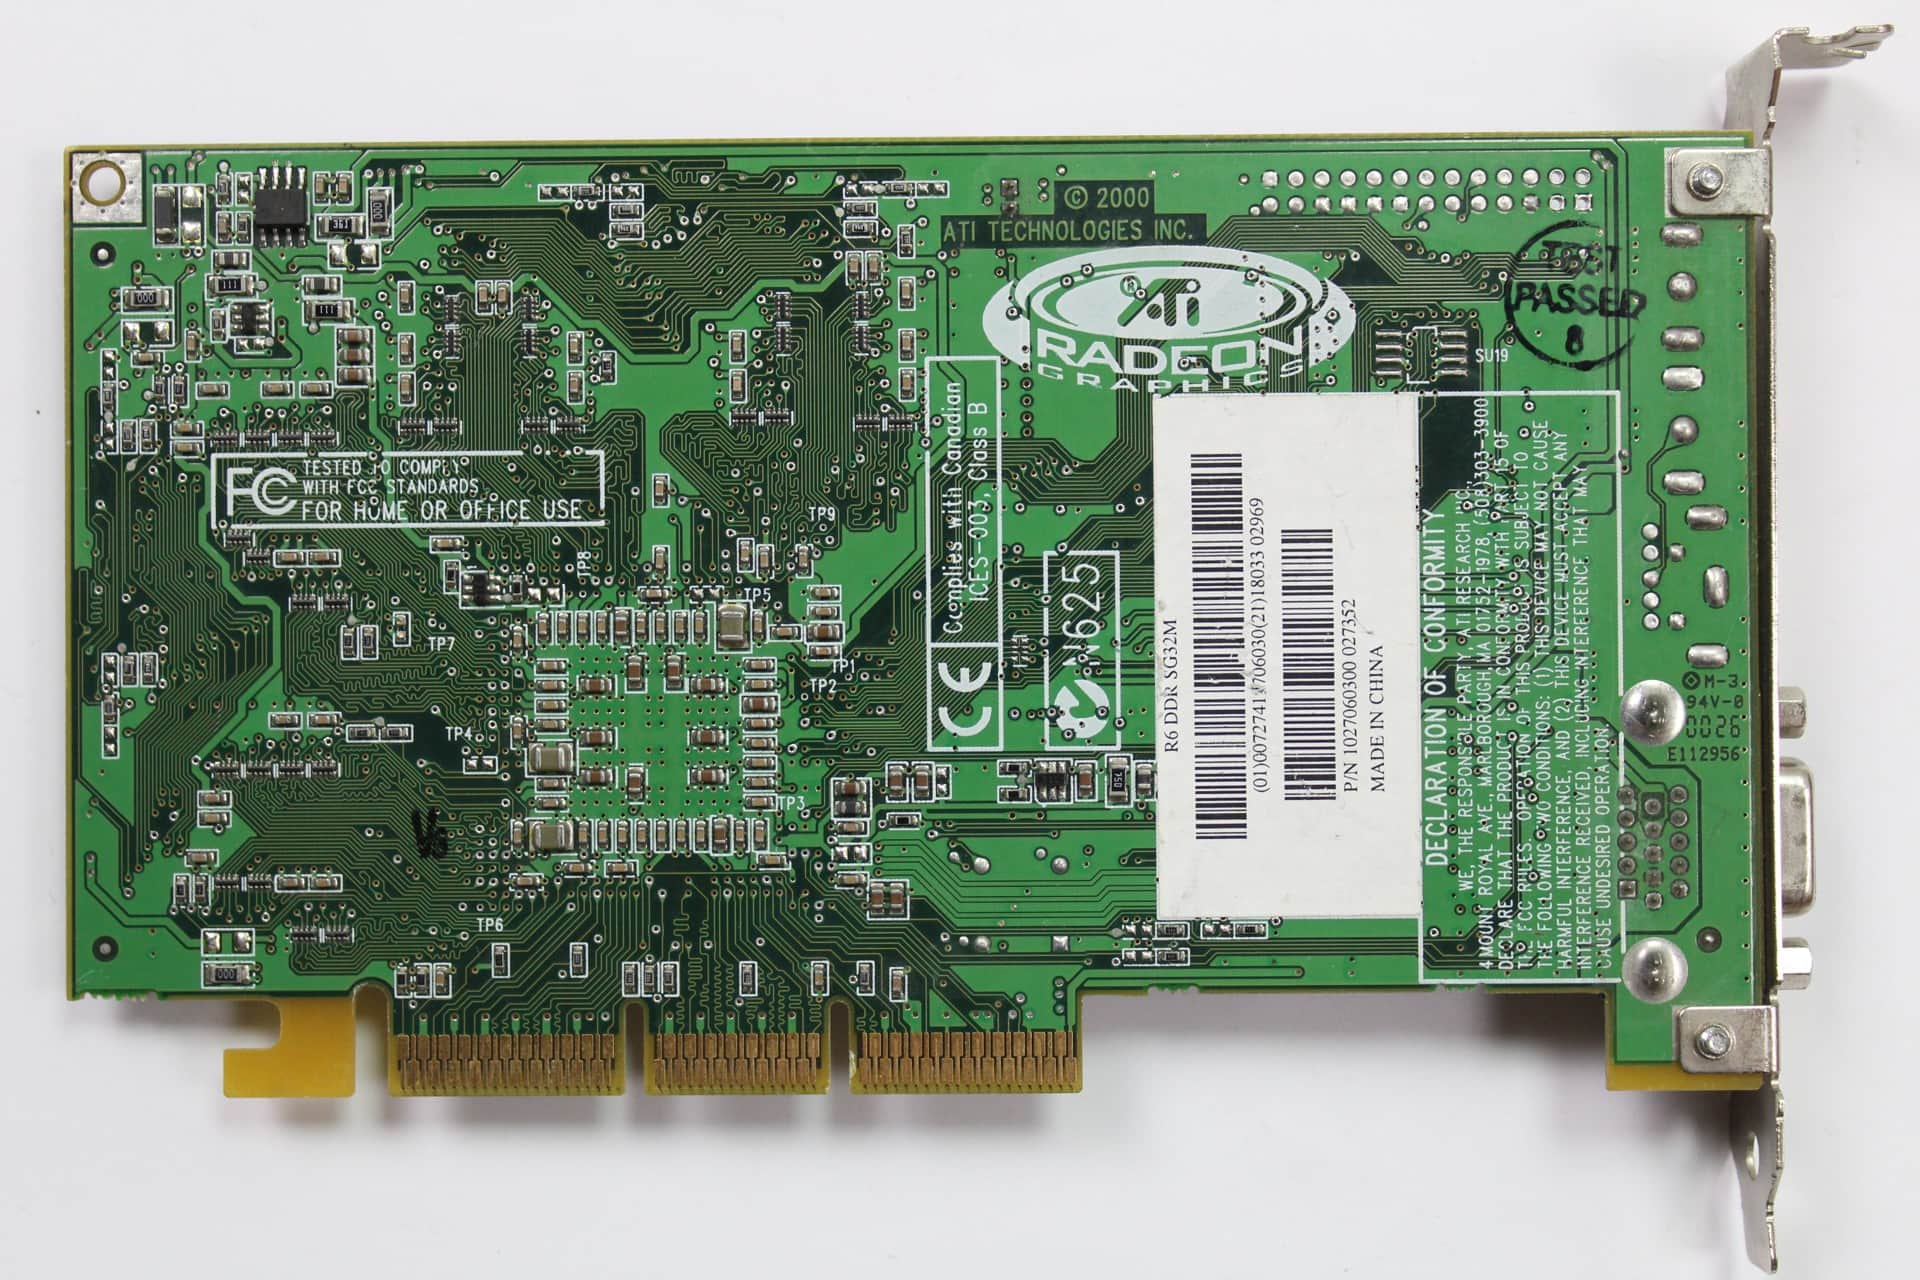 ATI Radeon 7200 DDR